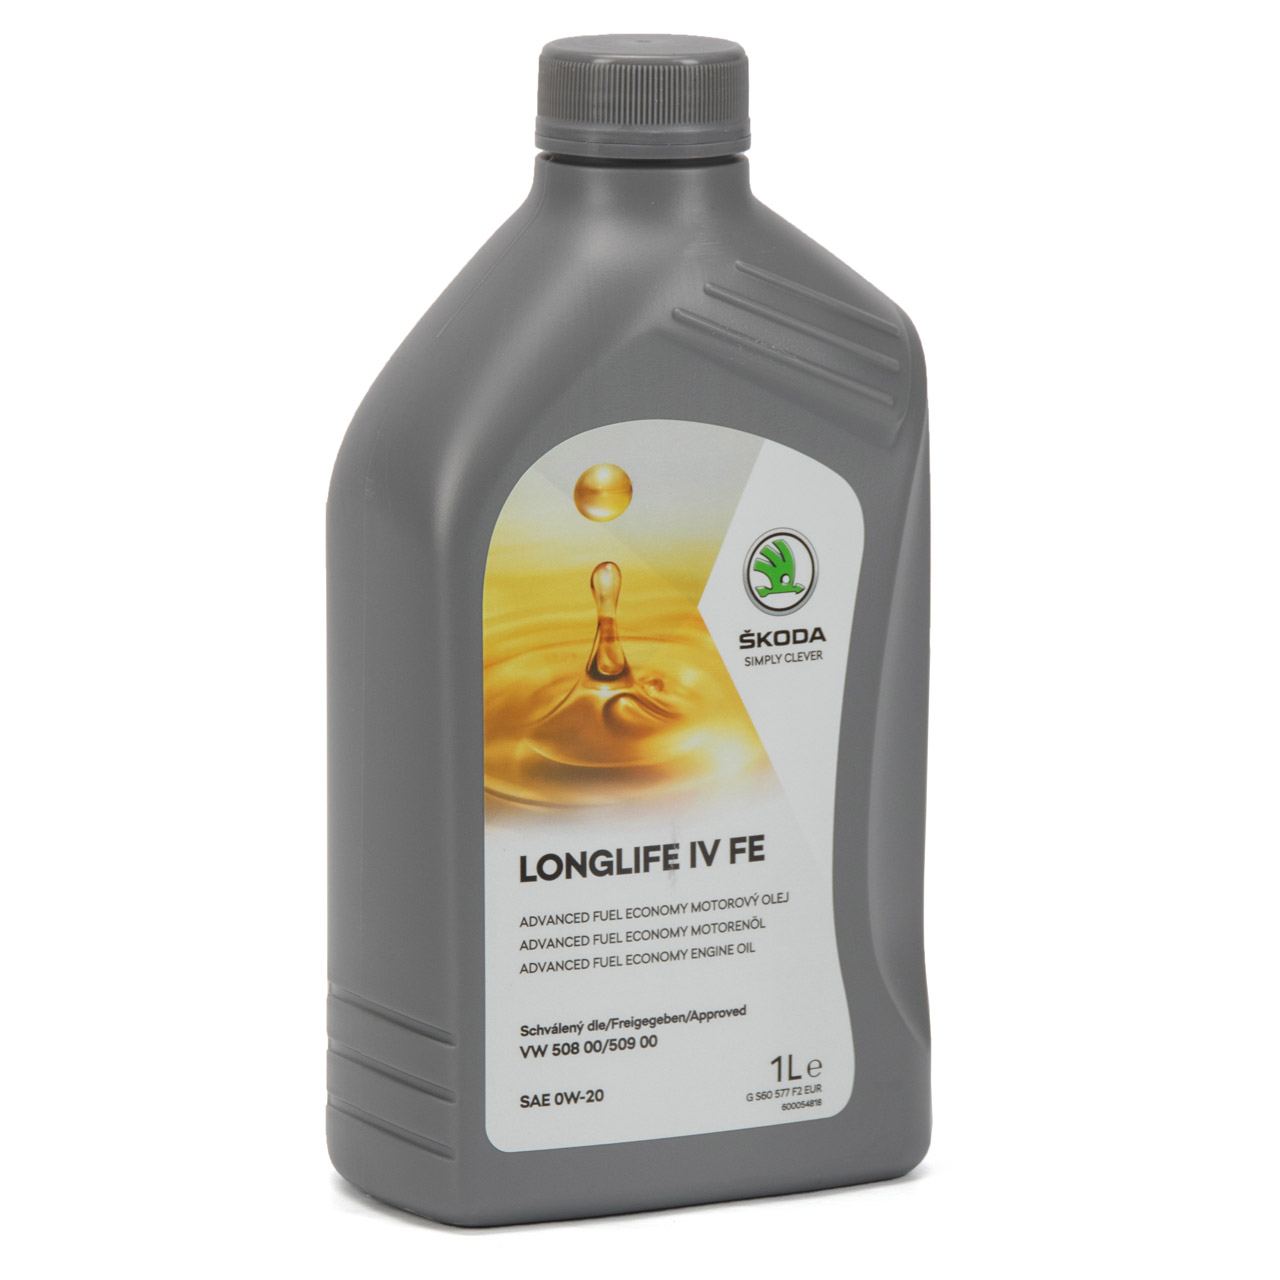 6 Liter ORIGINAL SKODA Motoröl Öl 0W20 LONGLIFE IV FE 508.00 509.00 GS60577F2